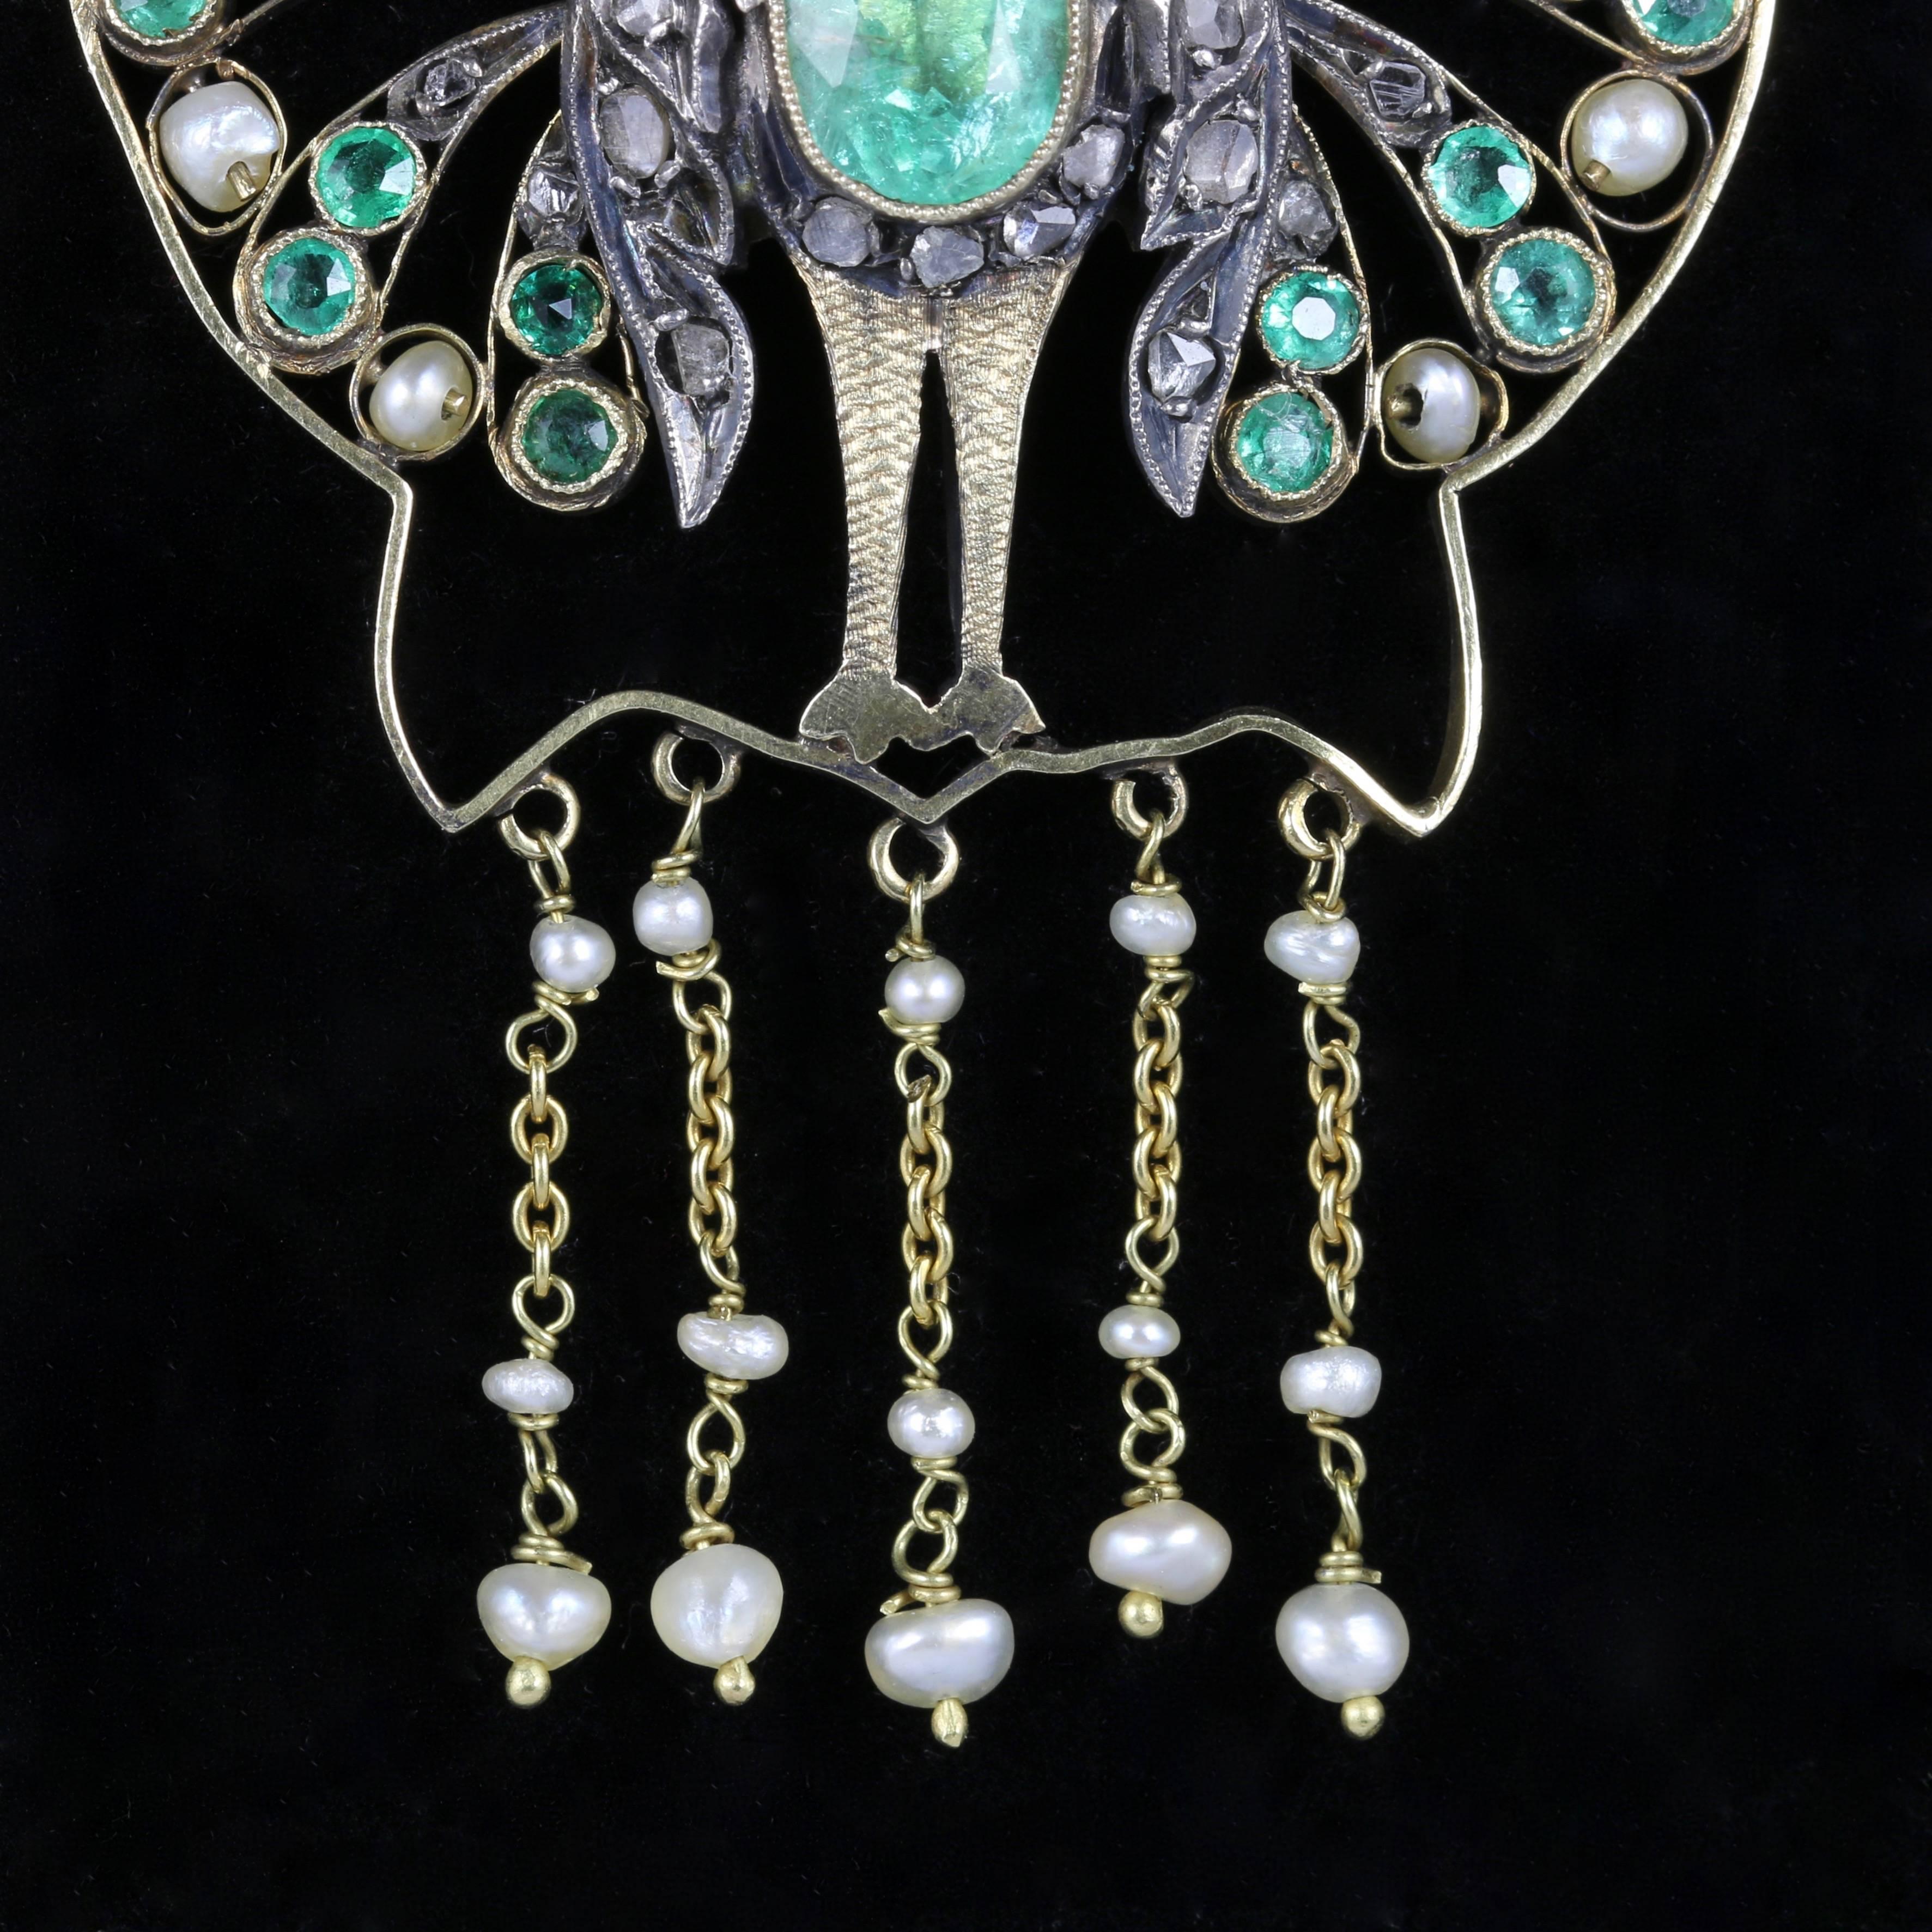 Women's Antique French Victorian Peacock Emerald Pearl Diamond Necklace, circa 1880